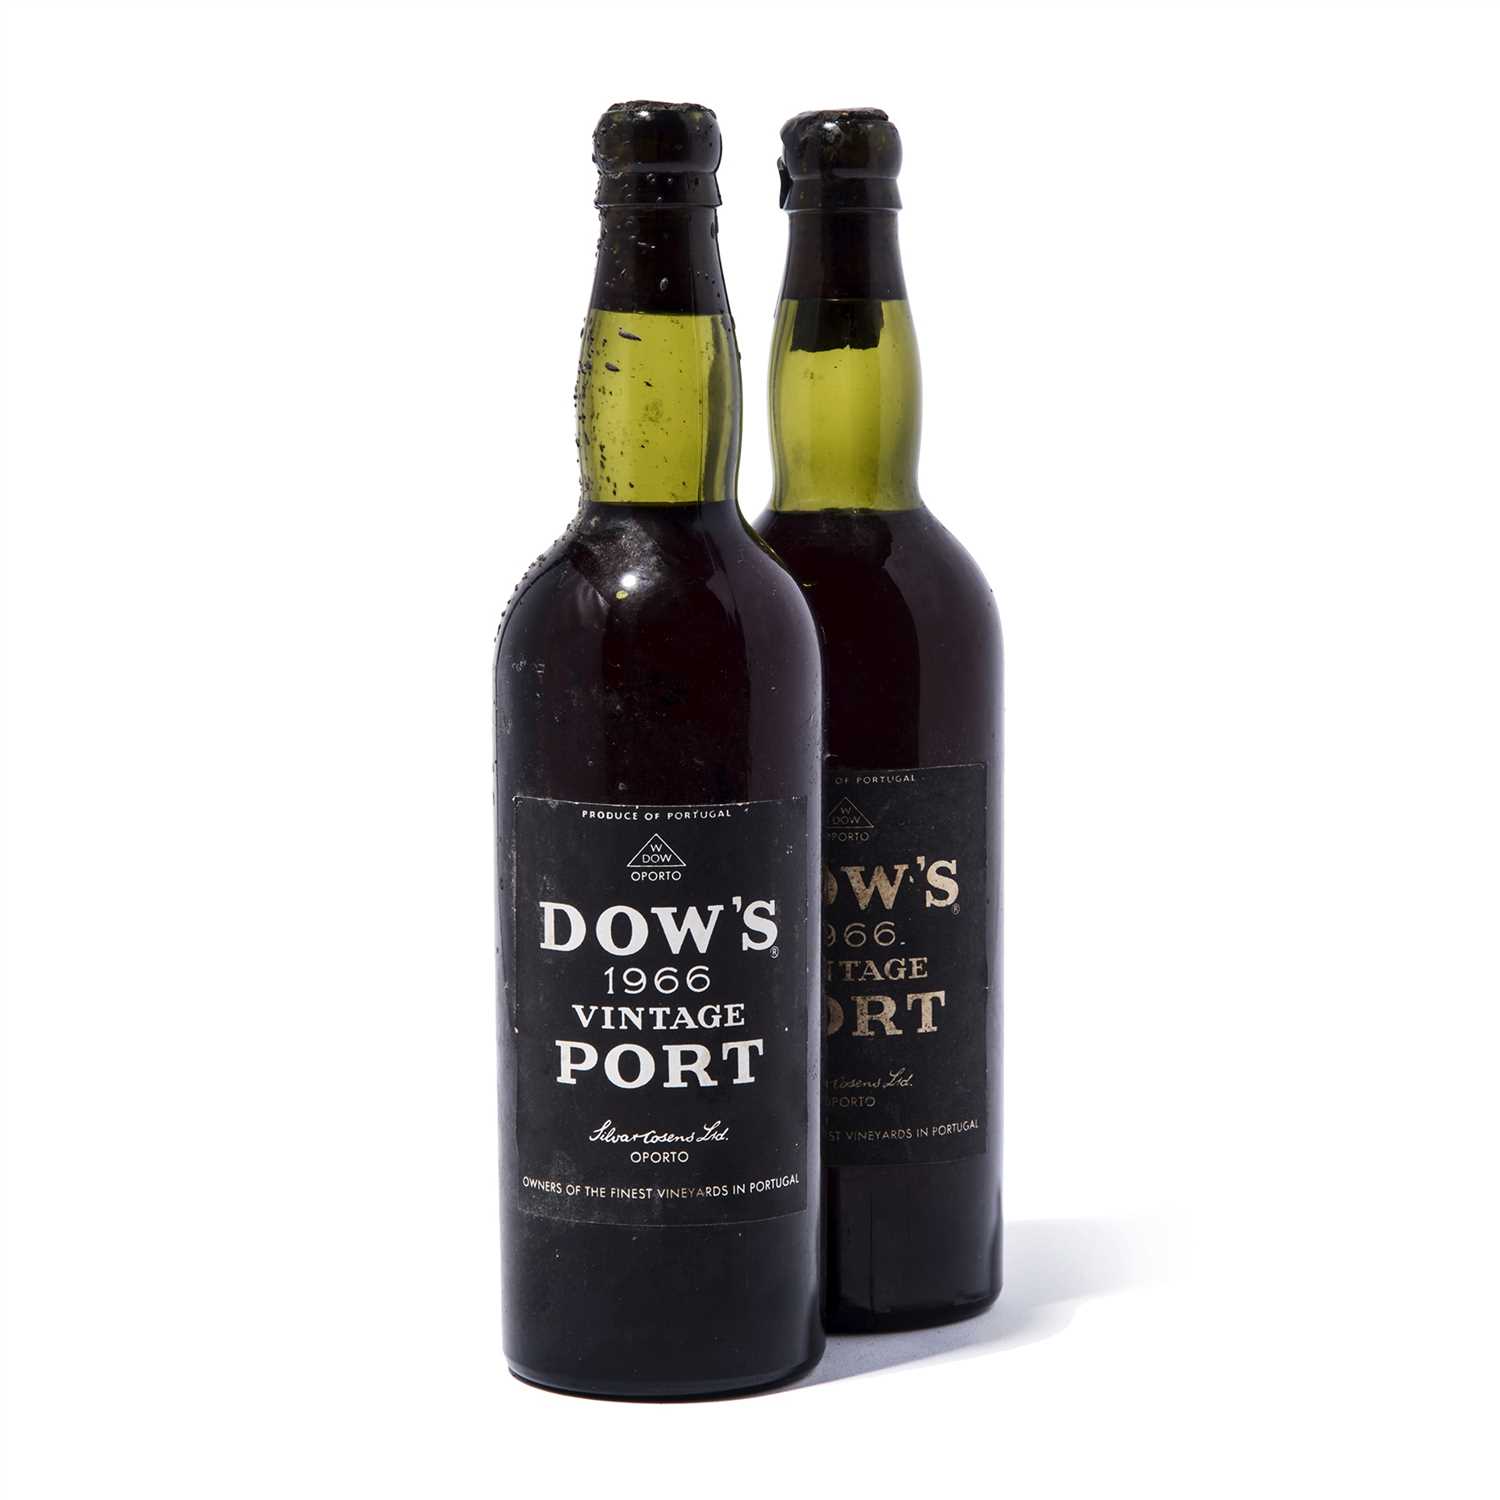 Lot 1 - 2 bottles 1966 Dow